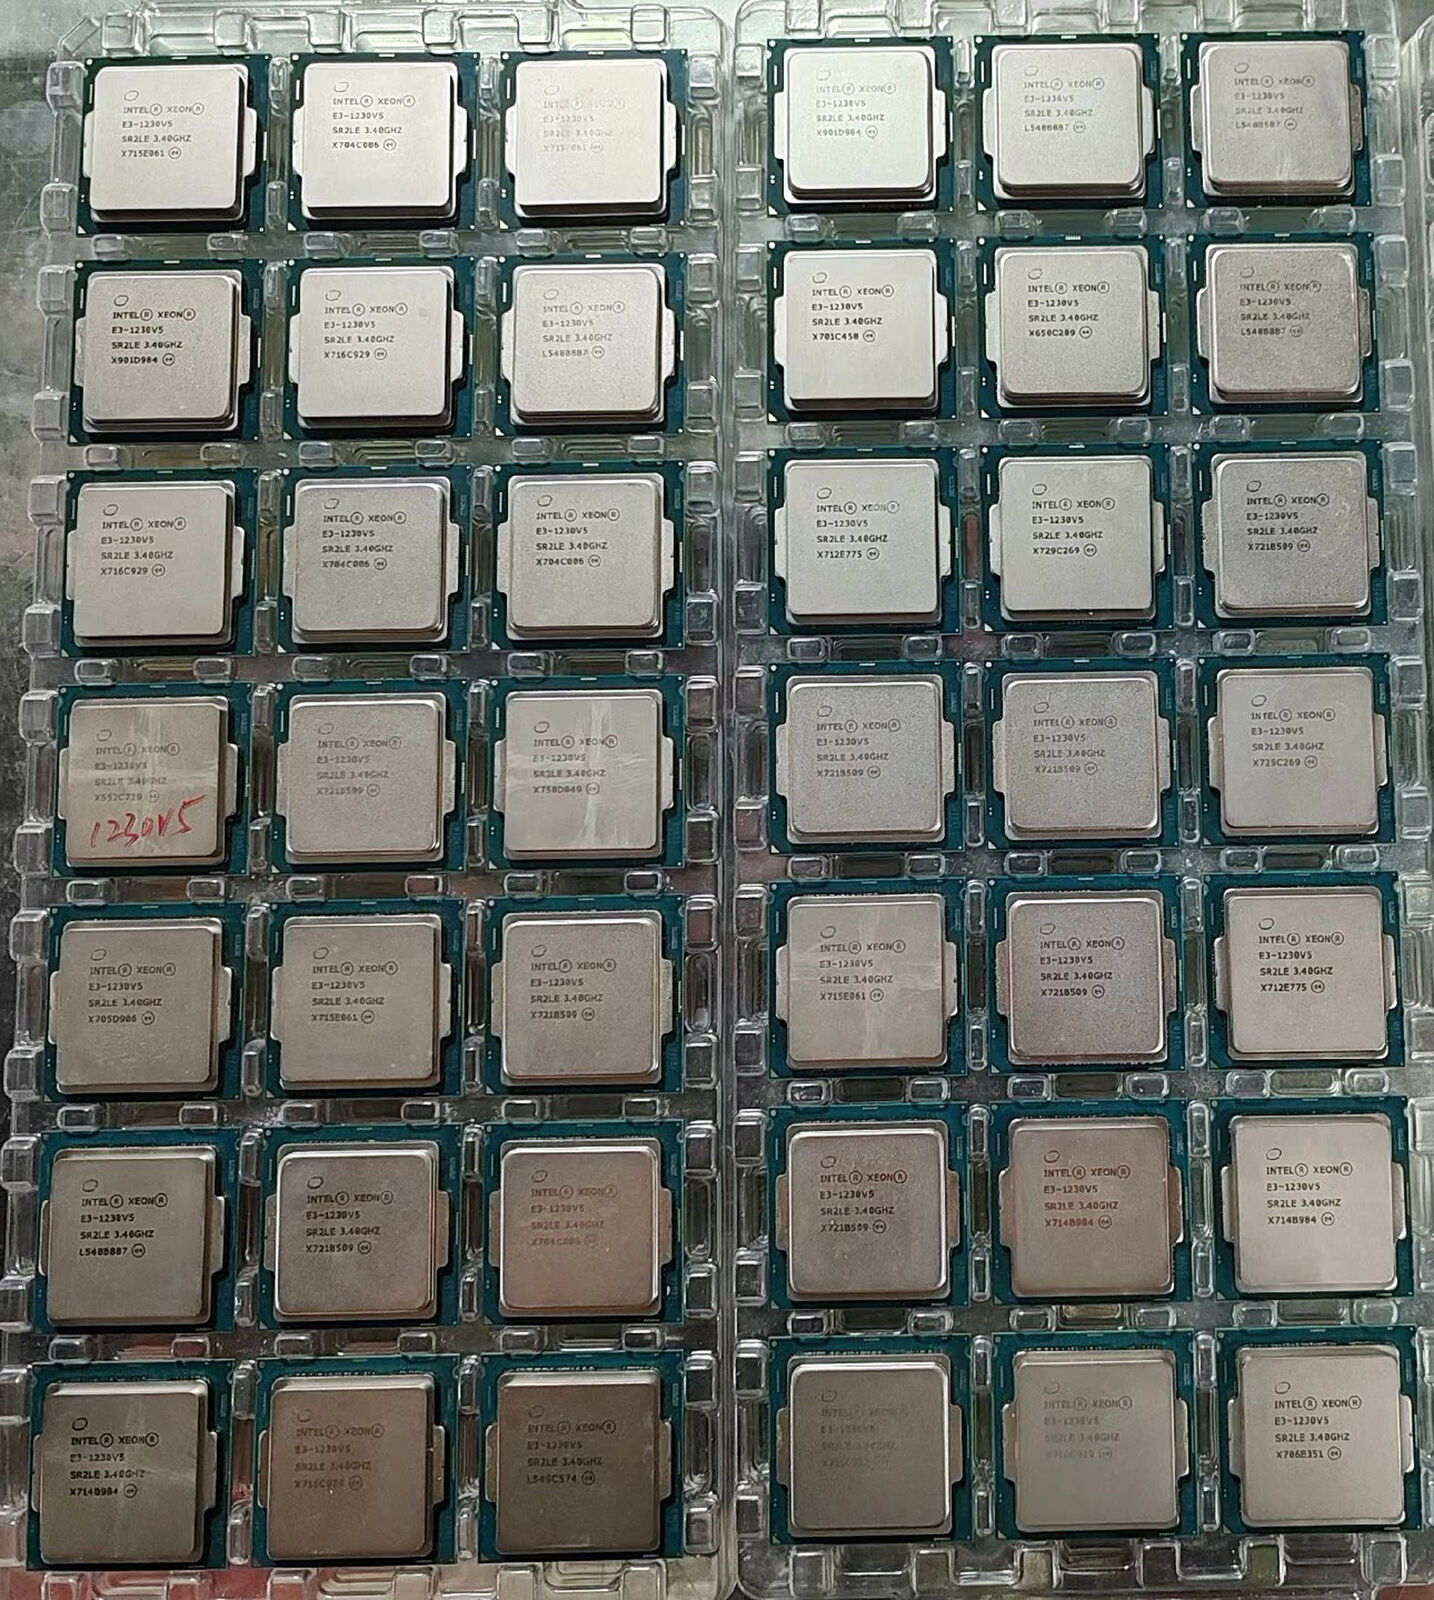 Intel Xeon E3-1230 V5 3.40GHz 4-core 8-thread 8MB 80W LGA1151 CPU processor